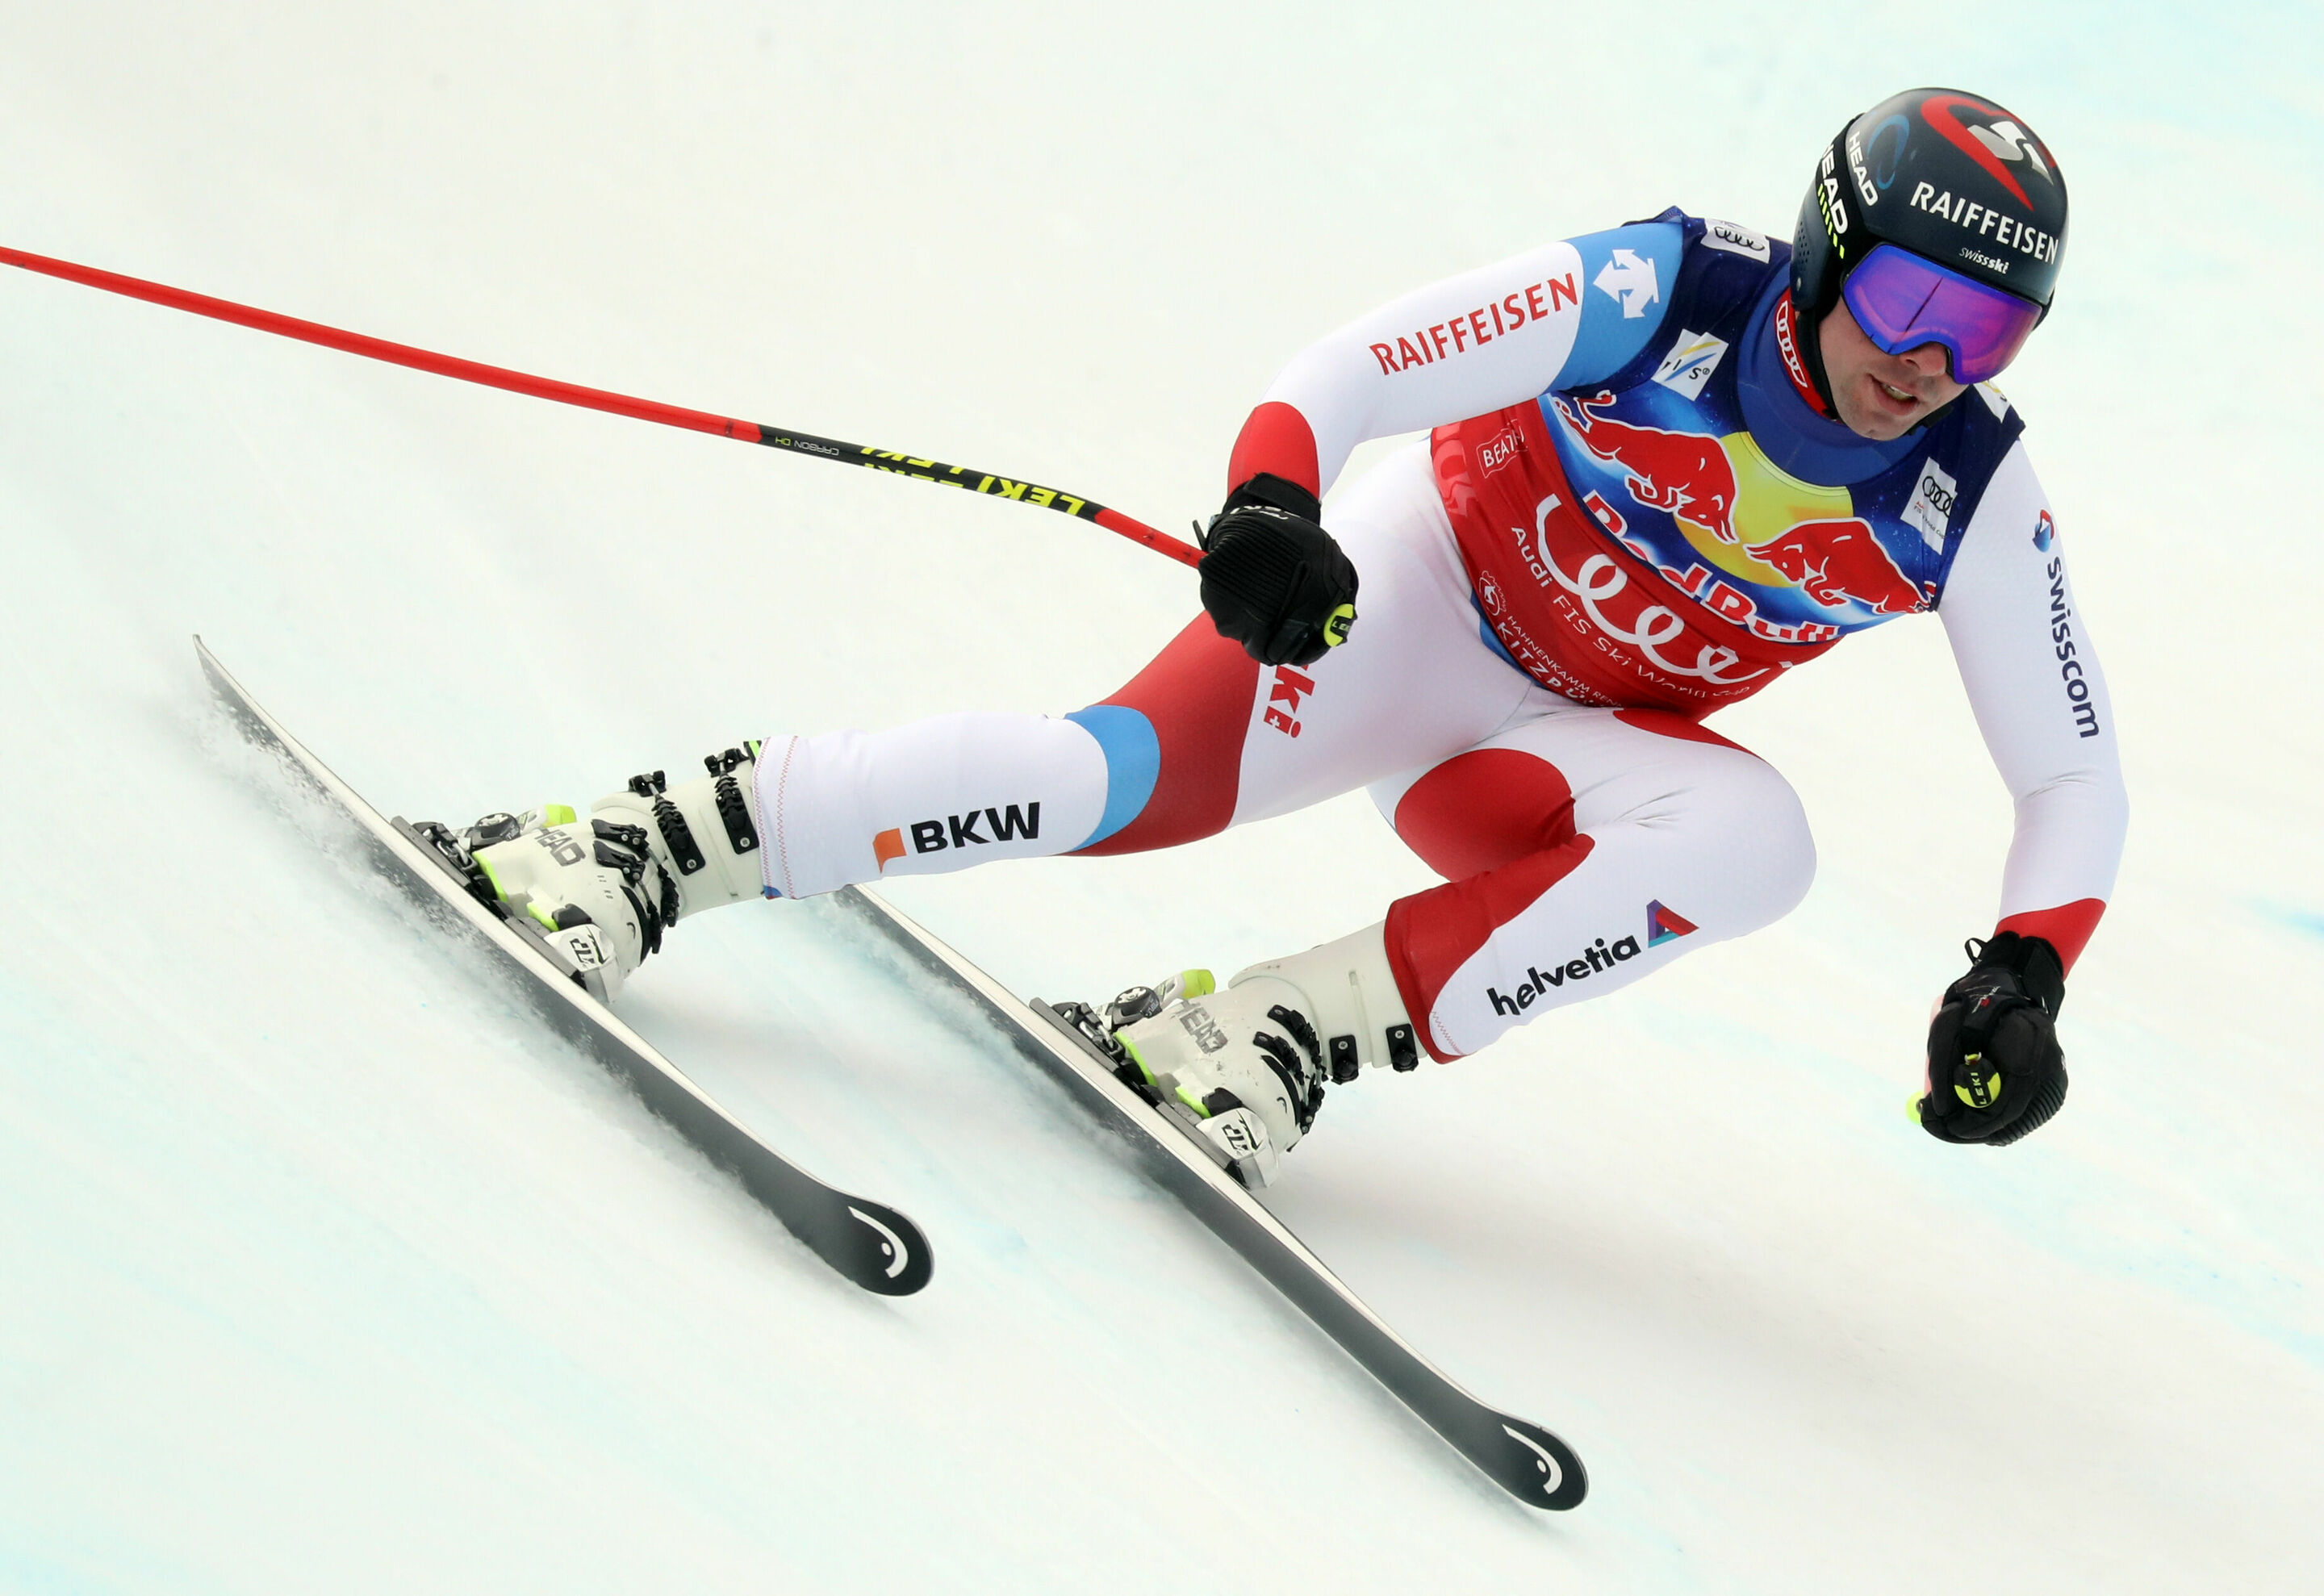 AUDI FIS Ski Weltcup 2019/20